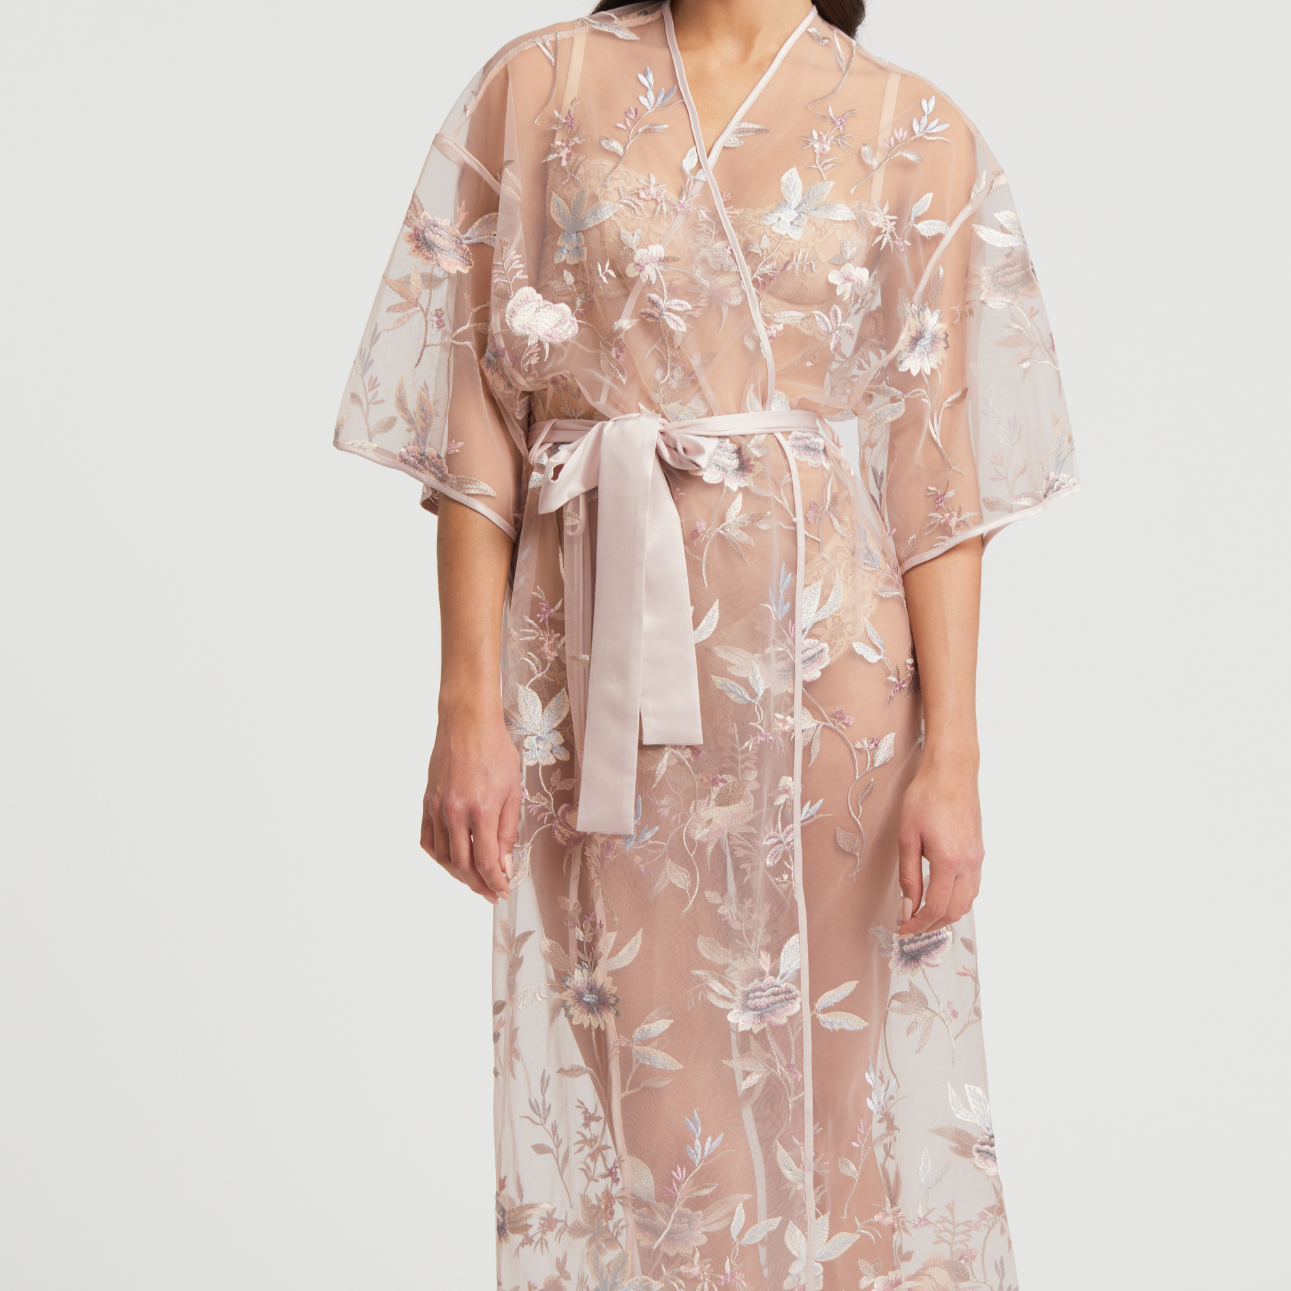 Stunning Robe - 307 - Sepia Rose Sleep & Lounge - Sleep - Robes & Kimonos Rya Collection PINK XS/S 